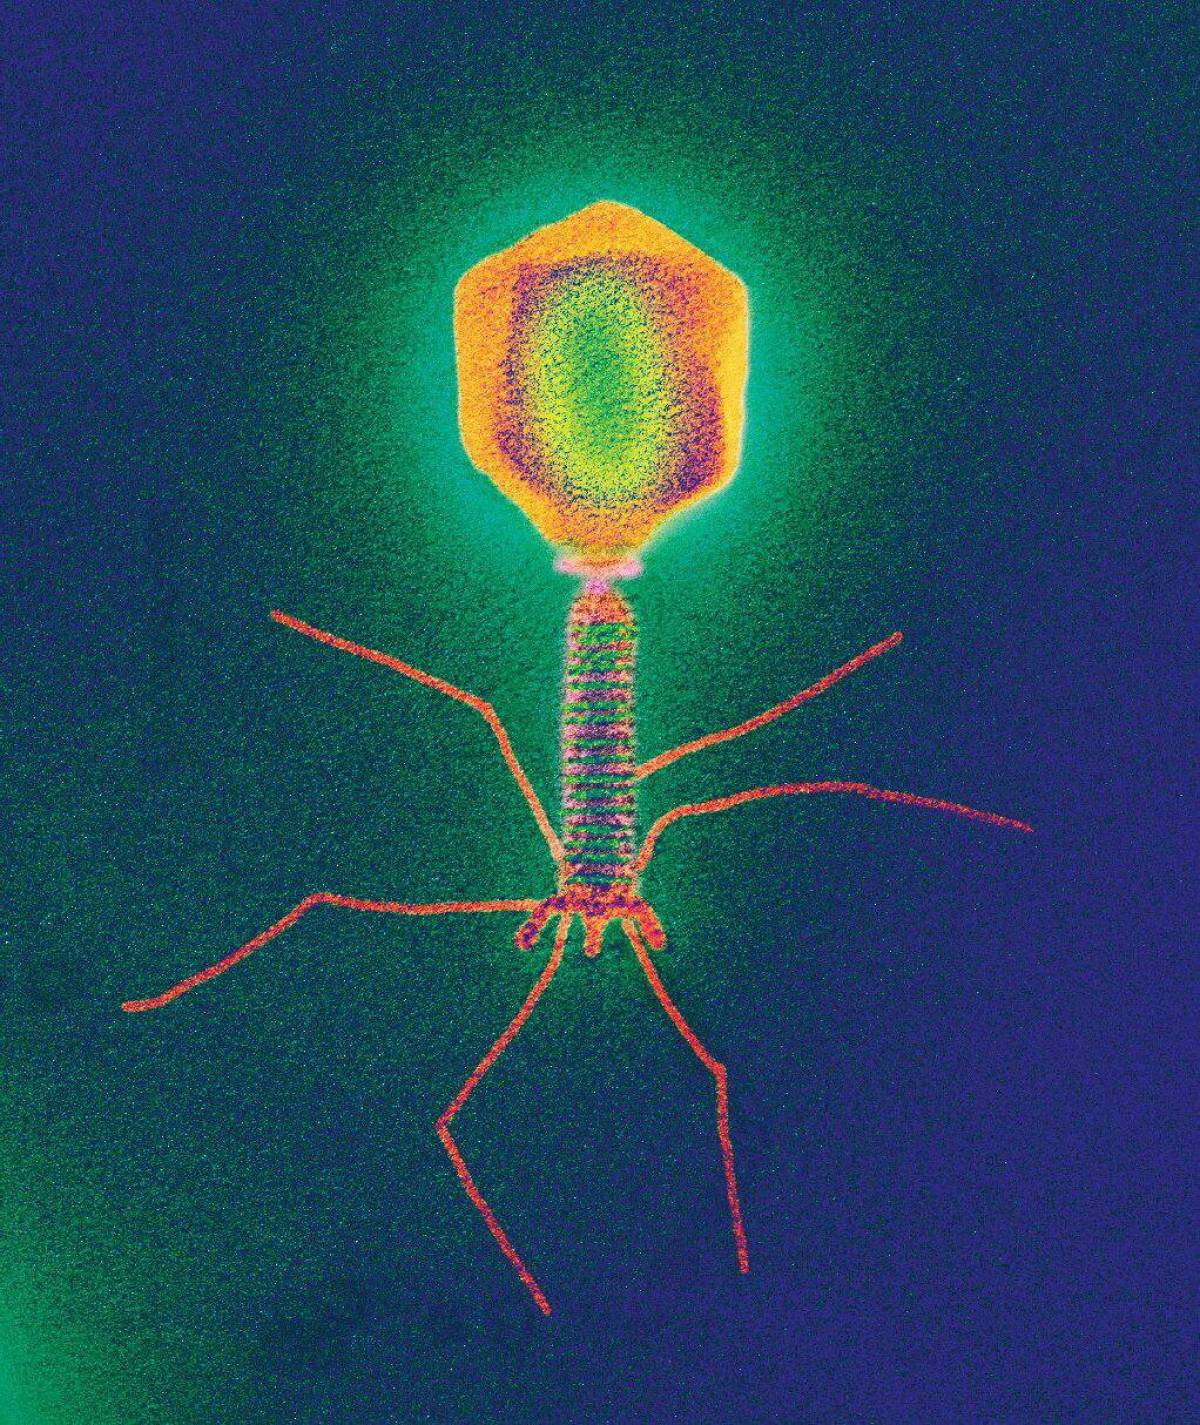 Земля без бактерий. Бактериофаг т4. Вируса фага т4. Т4 бактериофаг микроскоп. Бактериофаг т4 вирус.